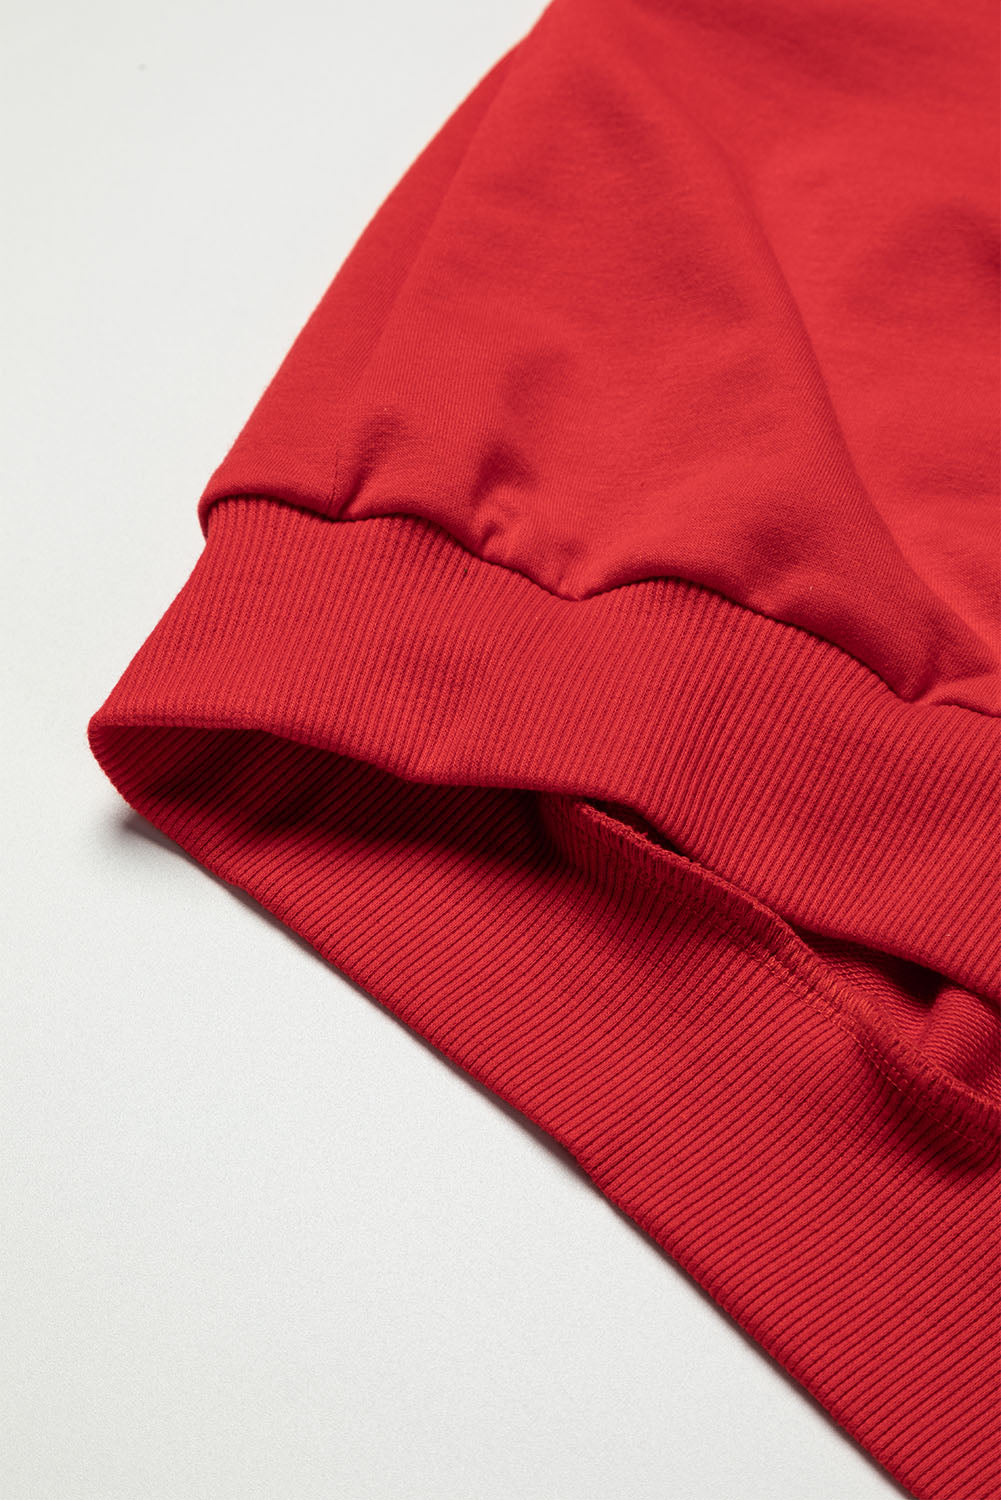 Rose Tan Button Tab Detail Long Sleeve Top